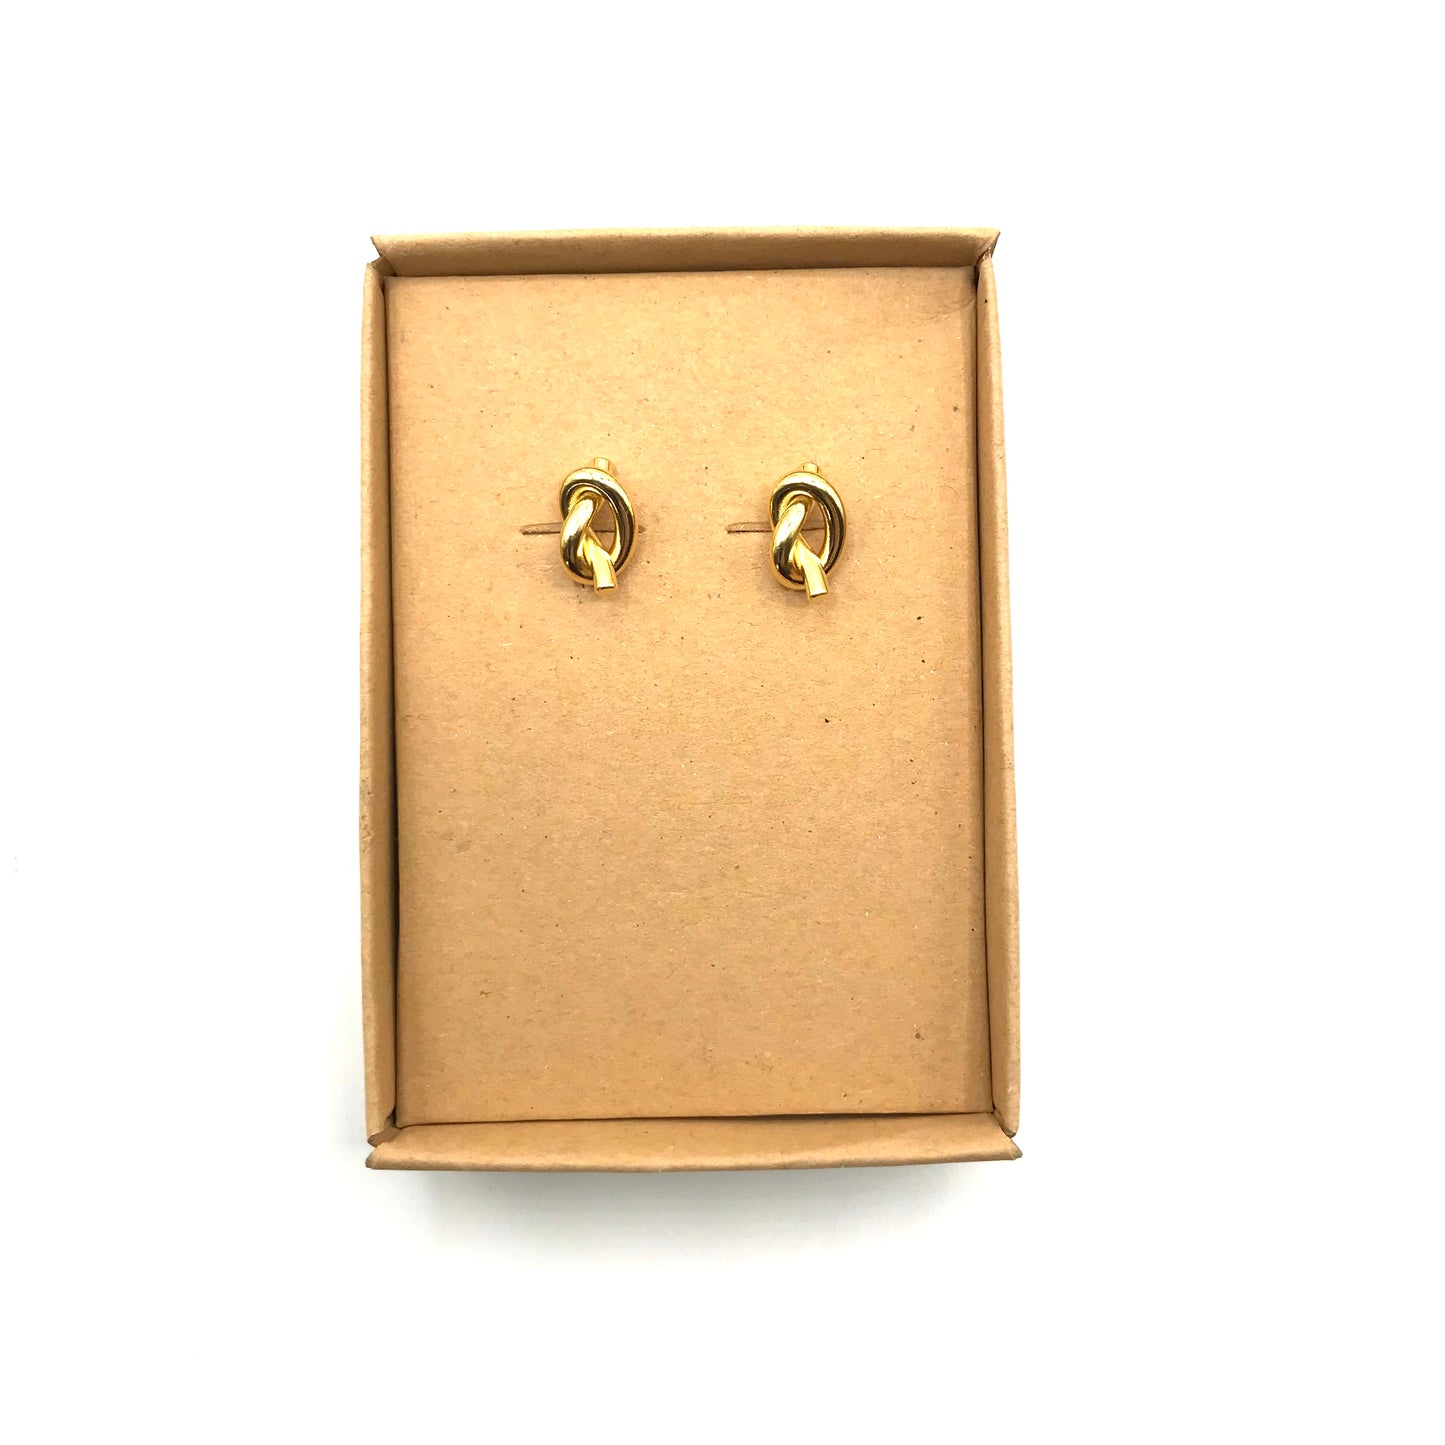 Nouveau knot earrings